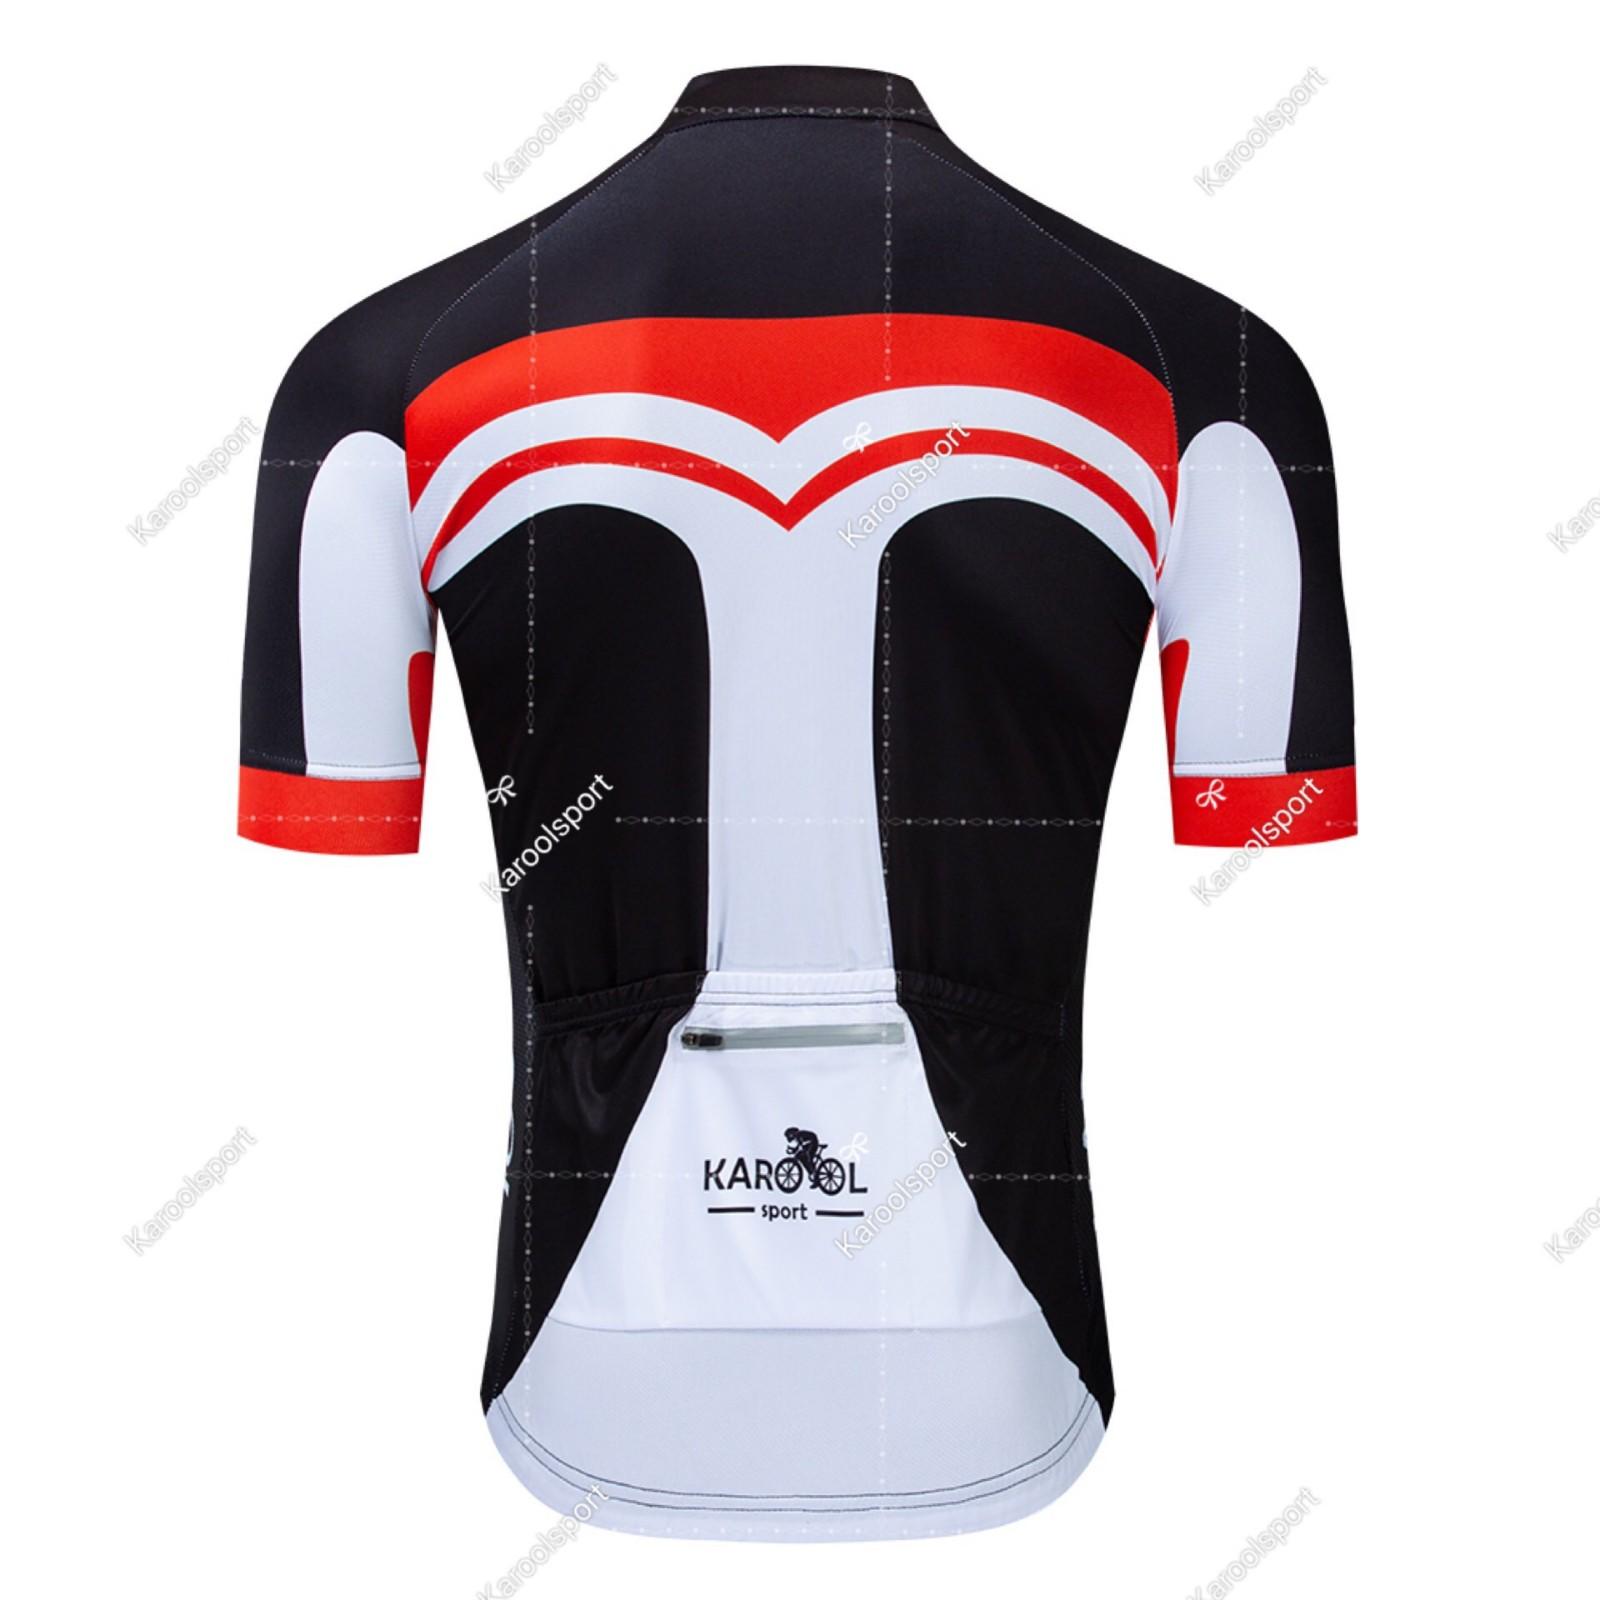 Karool cycling jersey manufacturer for men-3